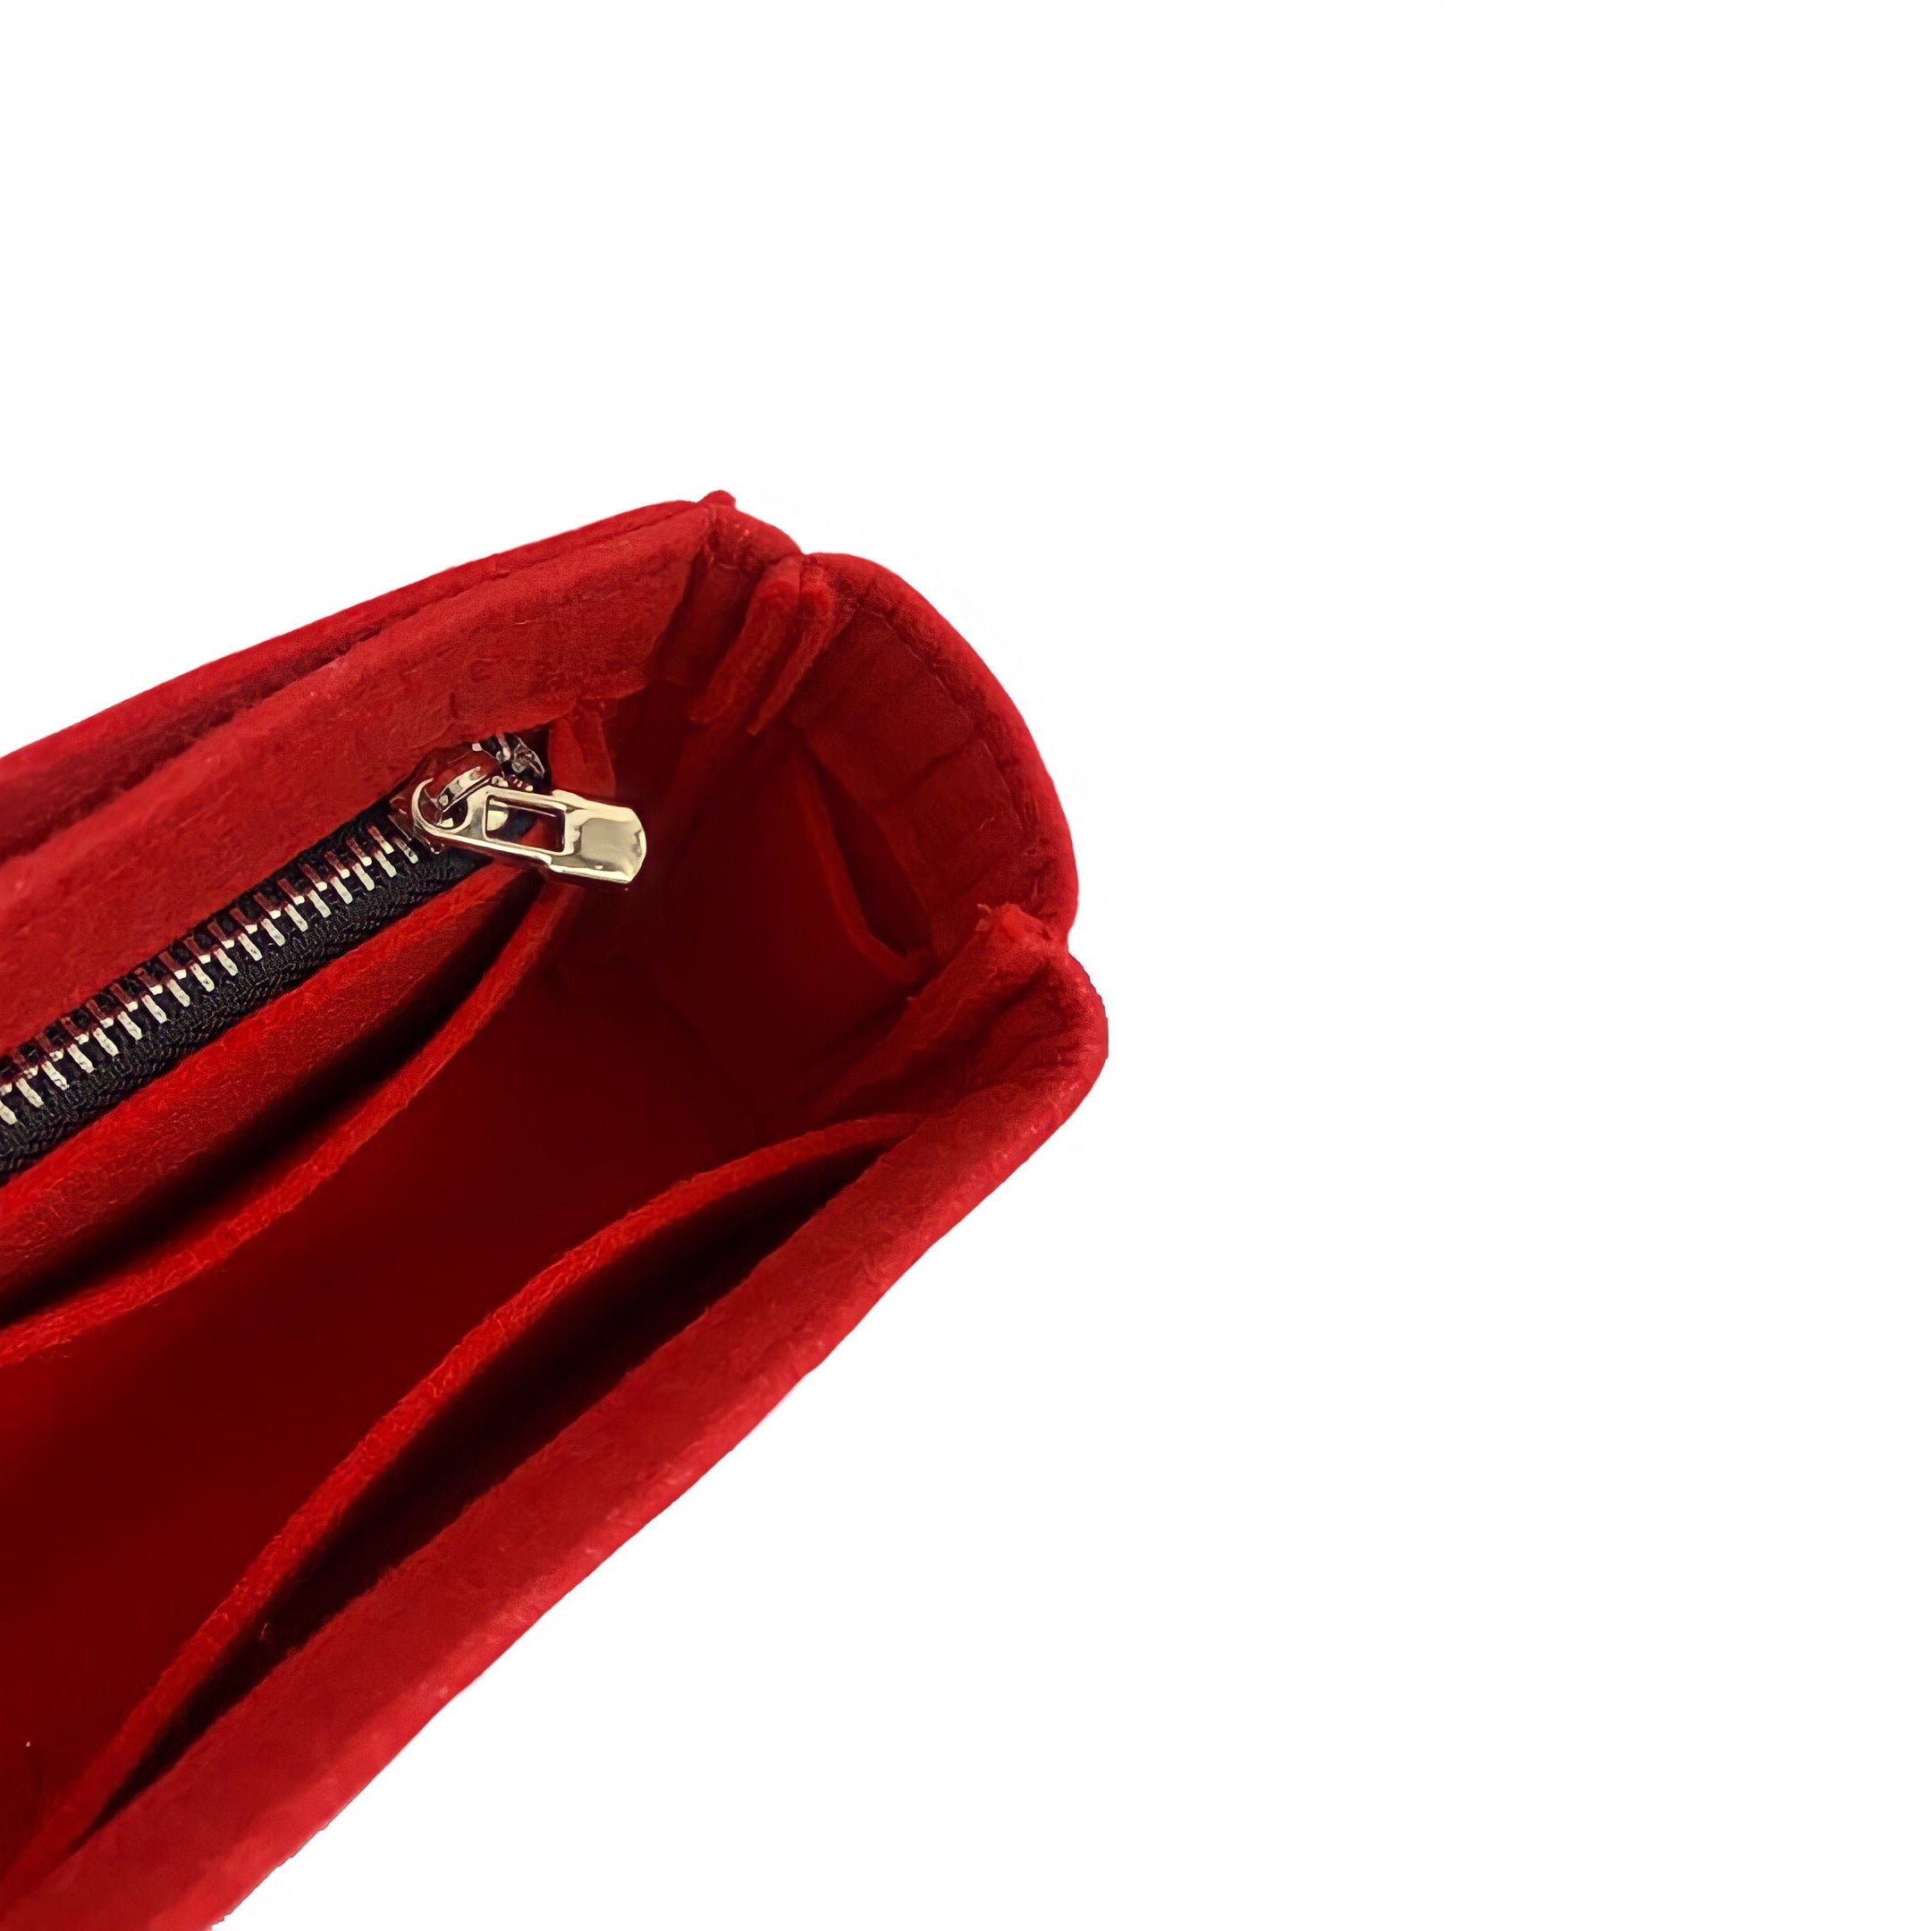 BaginBag | Handbag Organizer For Chanel CC 19 Waist Bag | Chanel Purse Insert  | Bag Liner | Chanel Insert Organizer | Chanel Organizer | Bag Organizer | Luxury bag | Chanel Bag protector | Chanel bag Insert